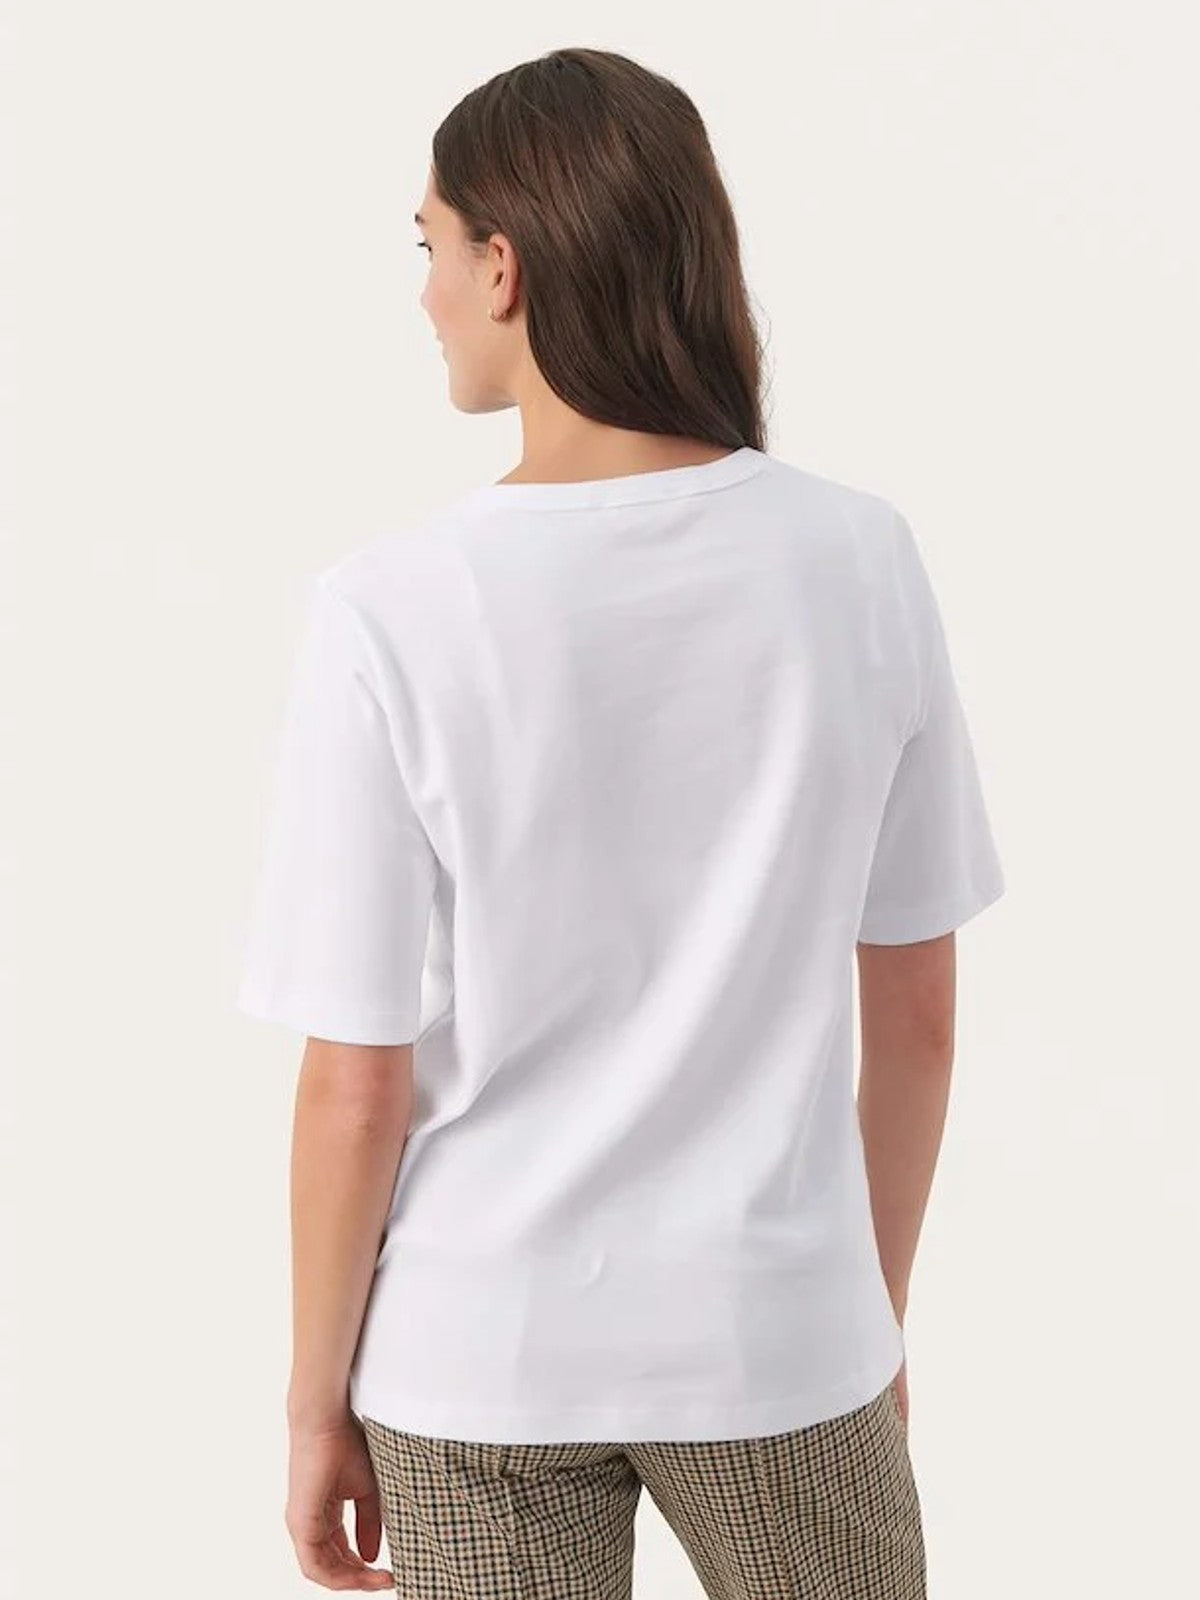 Ratana White T-Shirt